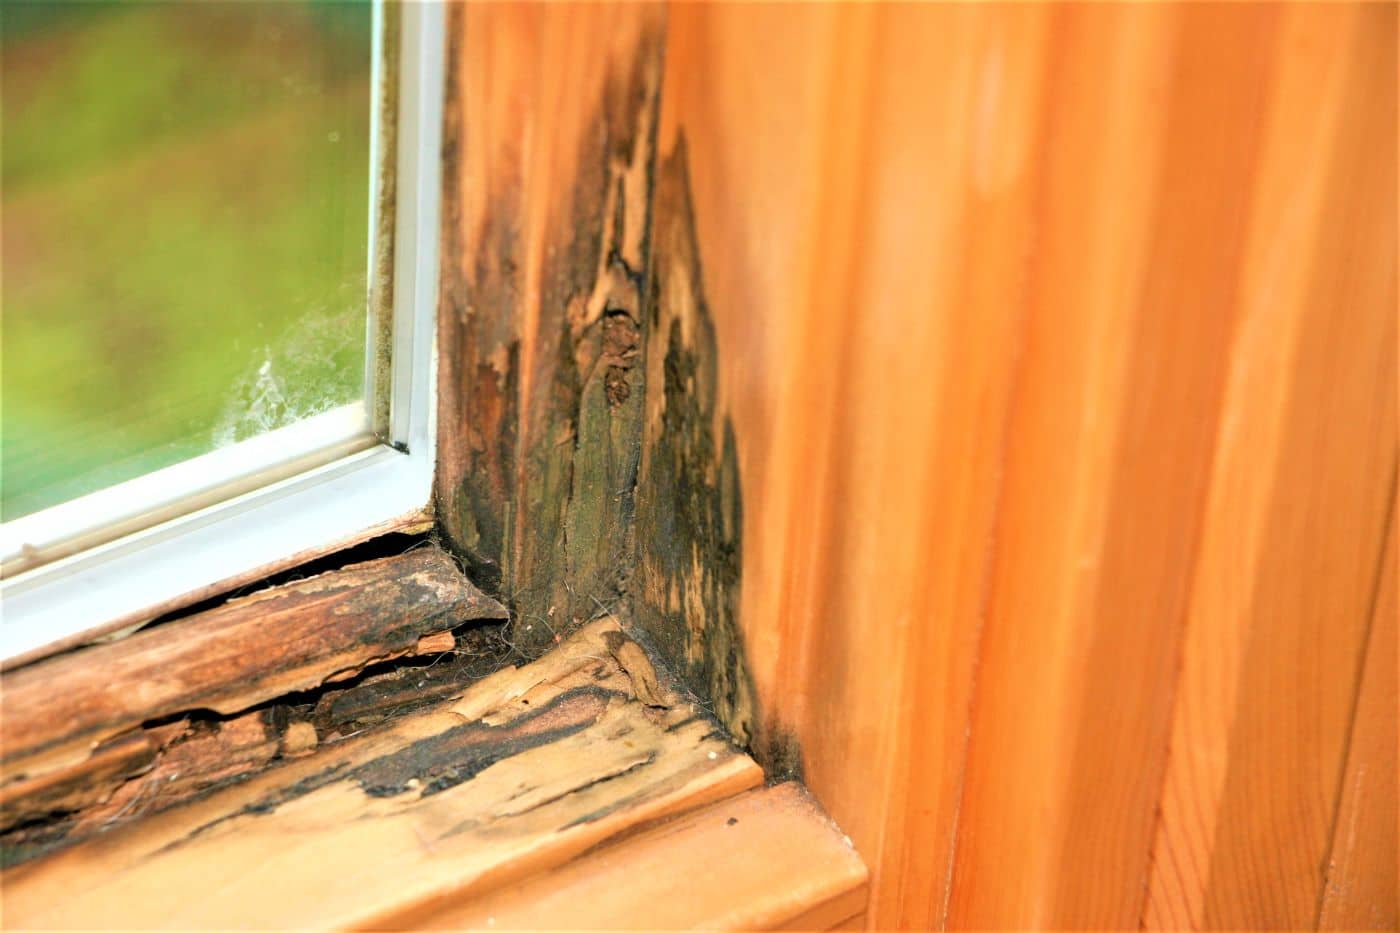  wood rot around old window